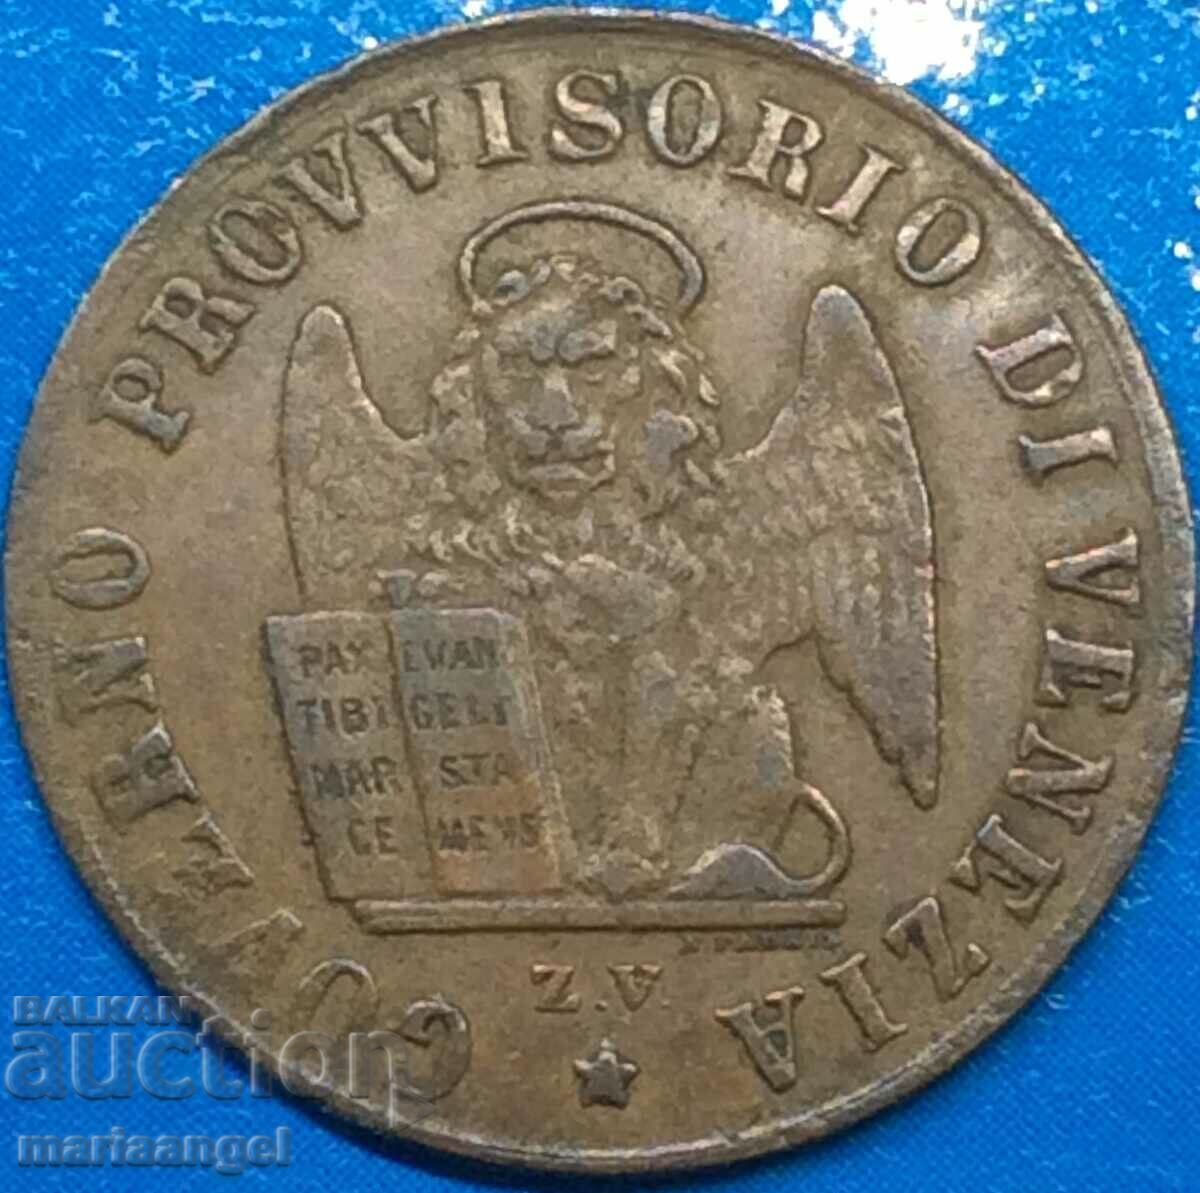 1 centesimo 1849 Italy Venice - rare denomination "One"